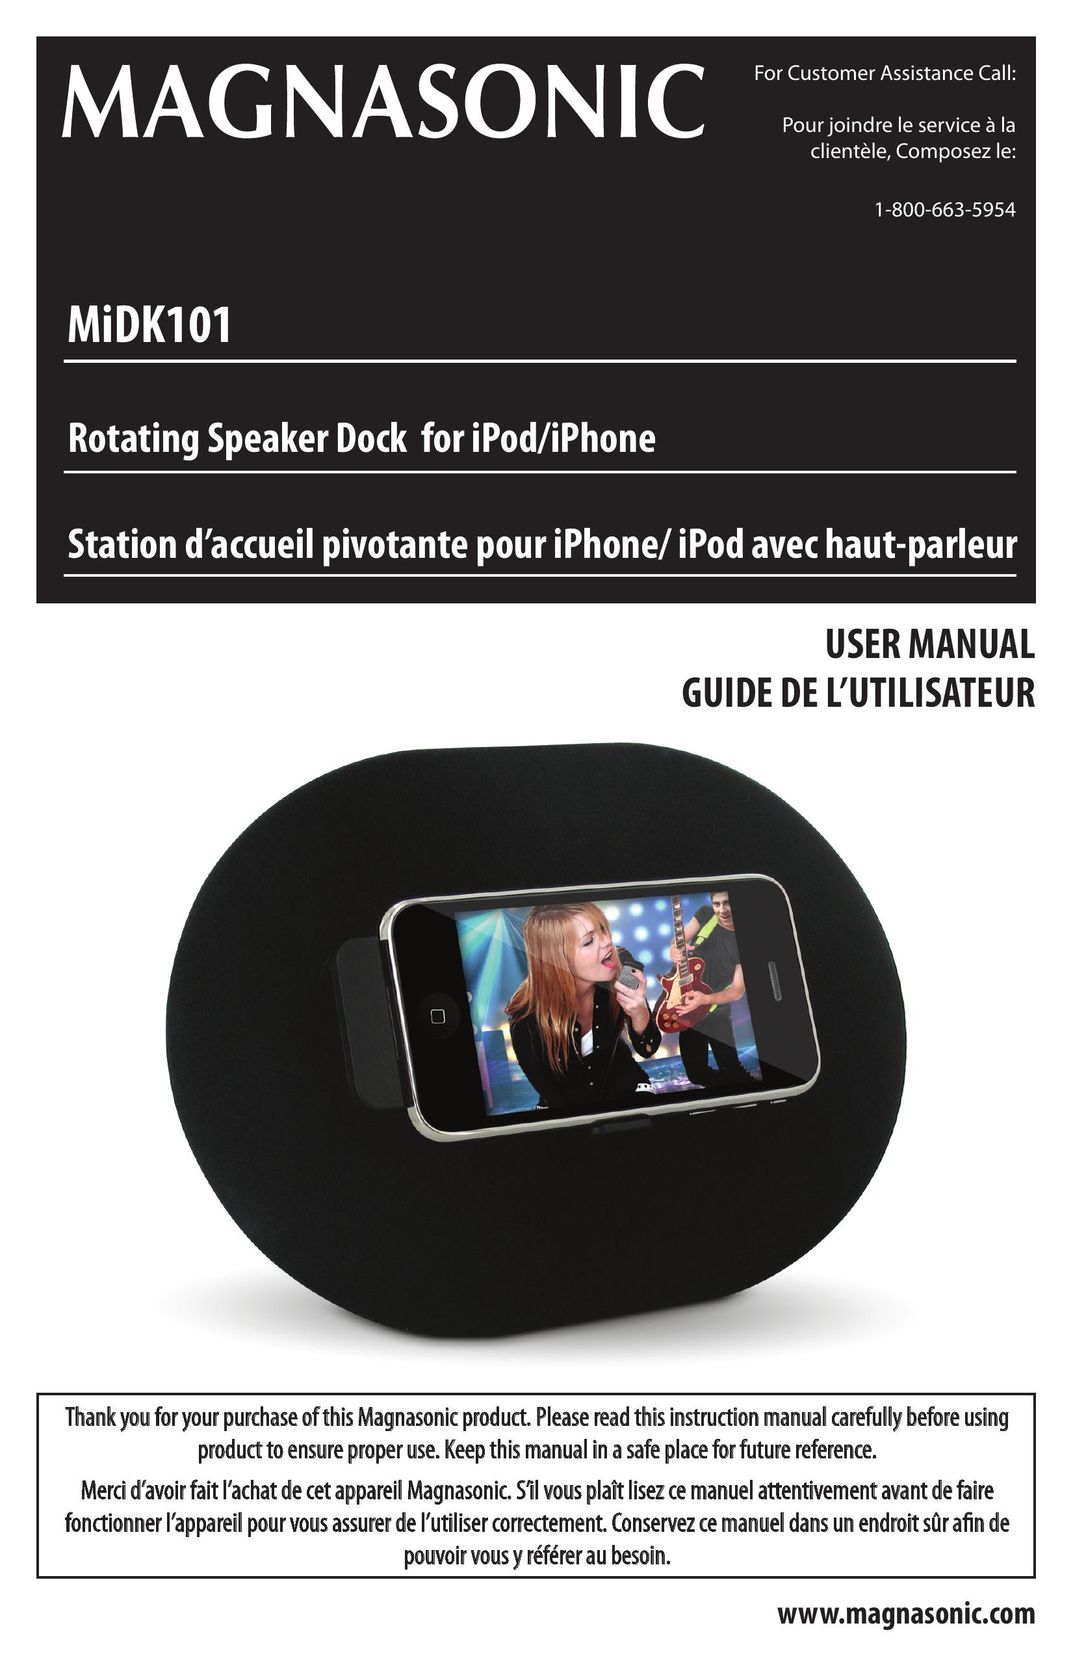 Magnasonic MiDK101 MP3 Docking Station User Manual